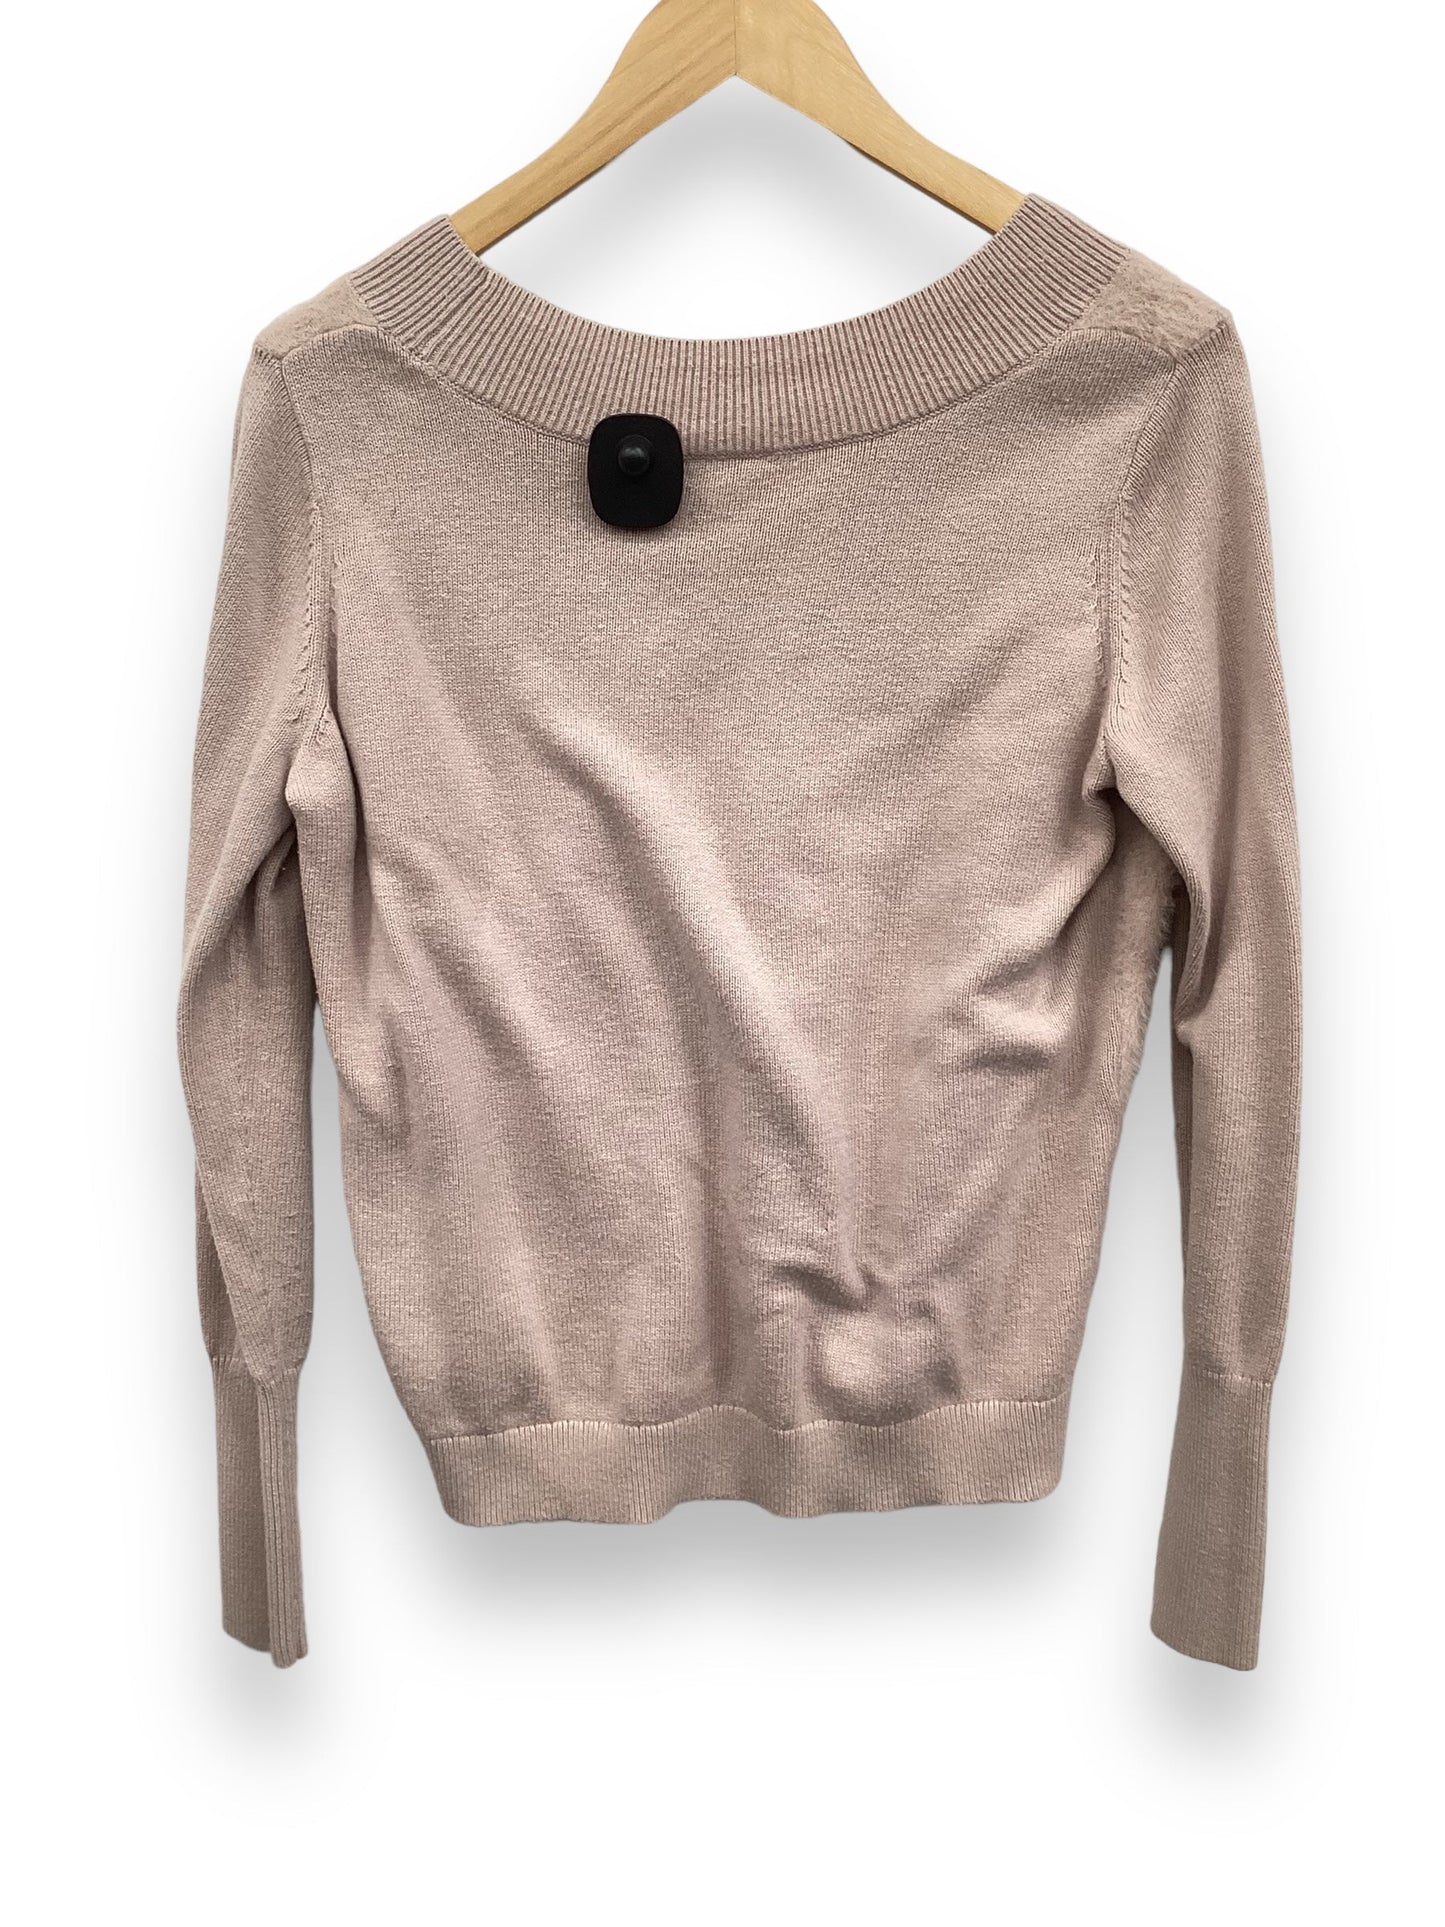 Sweater By Stella And Dot  Size: M